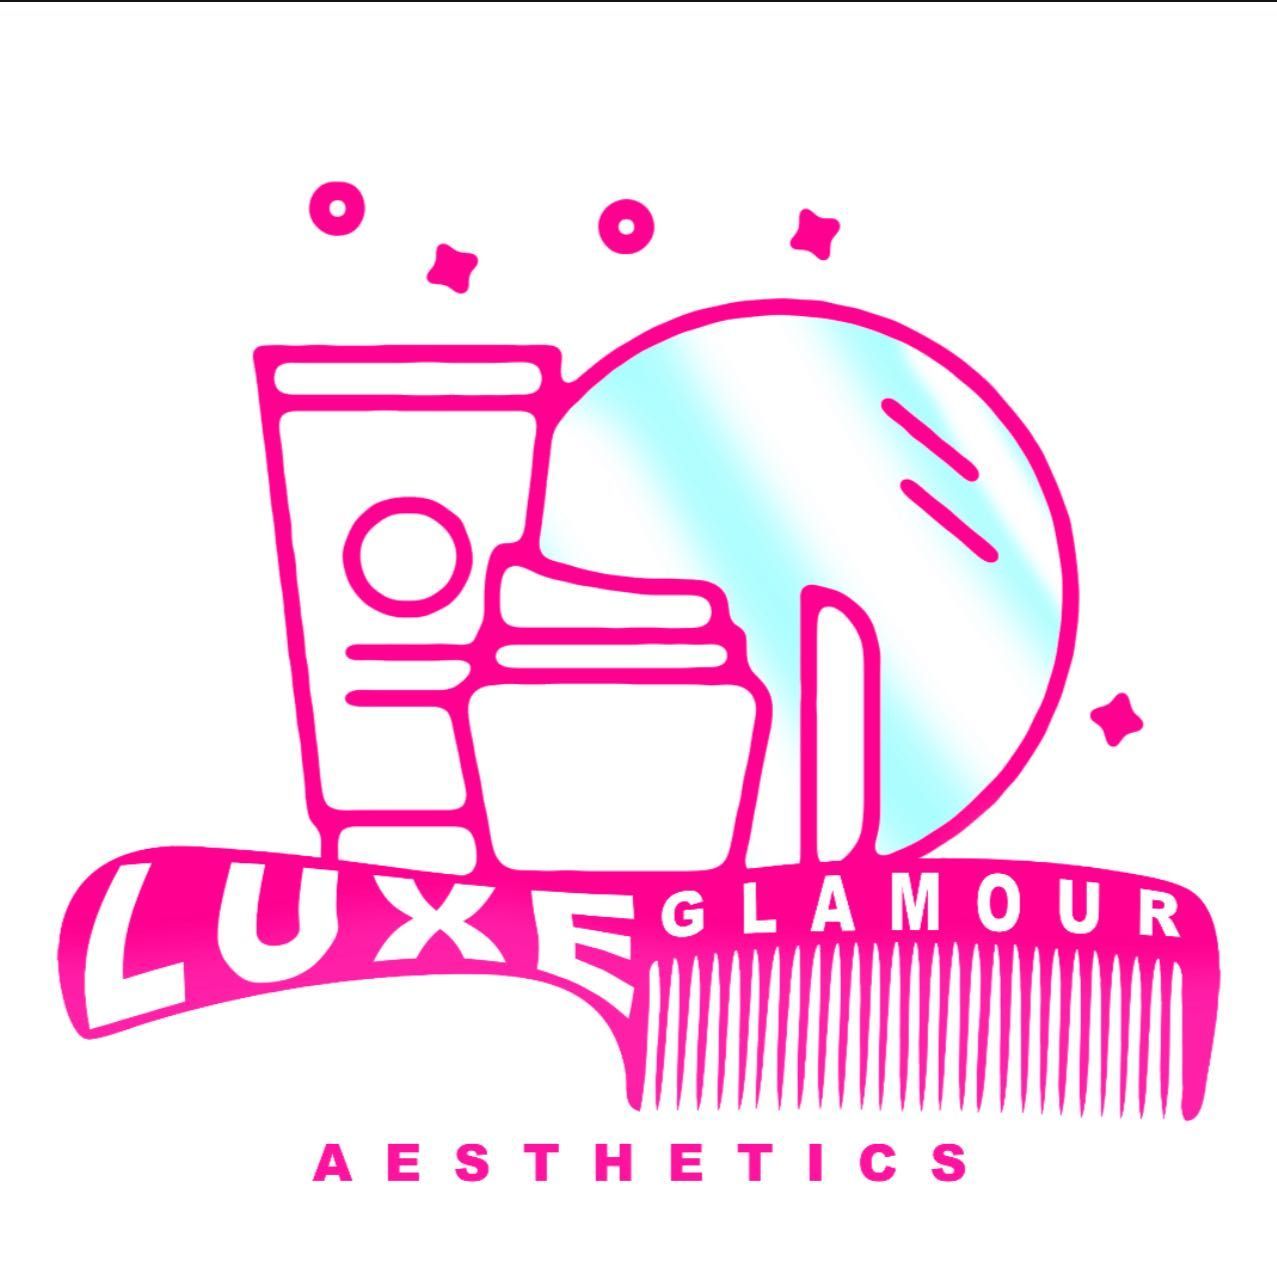 Luxe Glamour Aesthetics, 714 George Bush Blvd, Delray Beach, 33483, Delray Beach, 33483